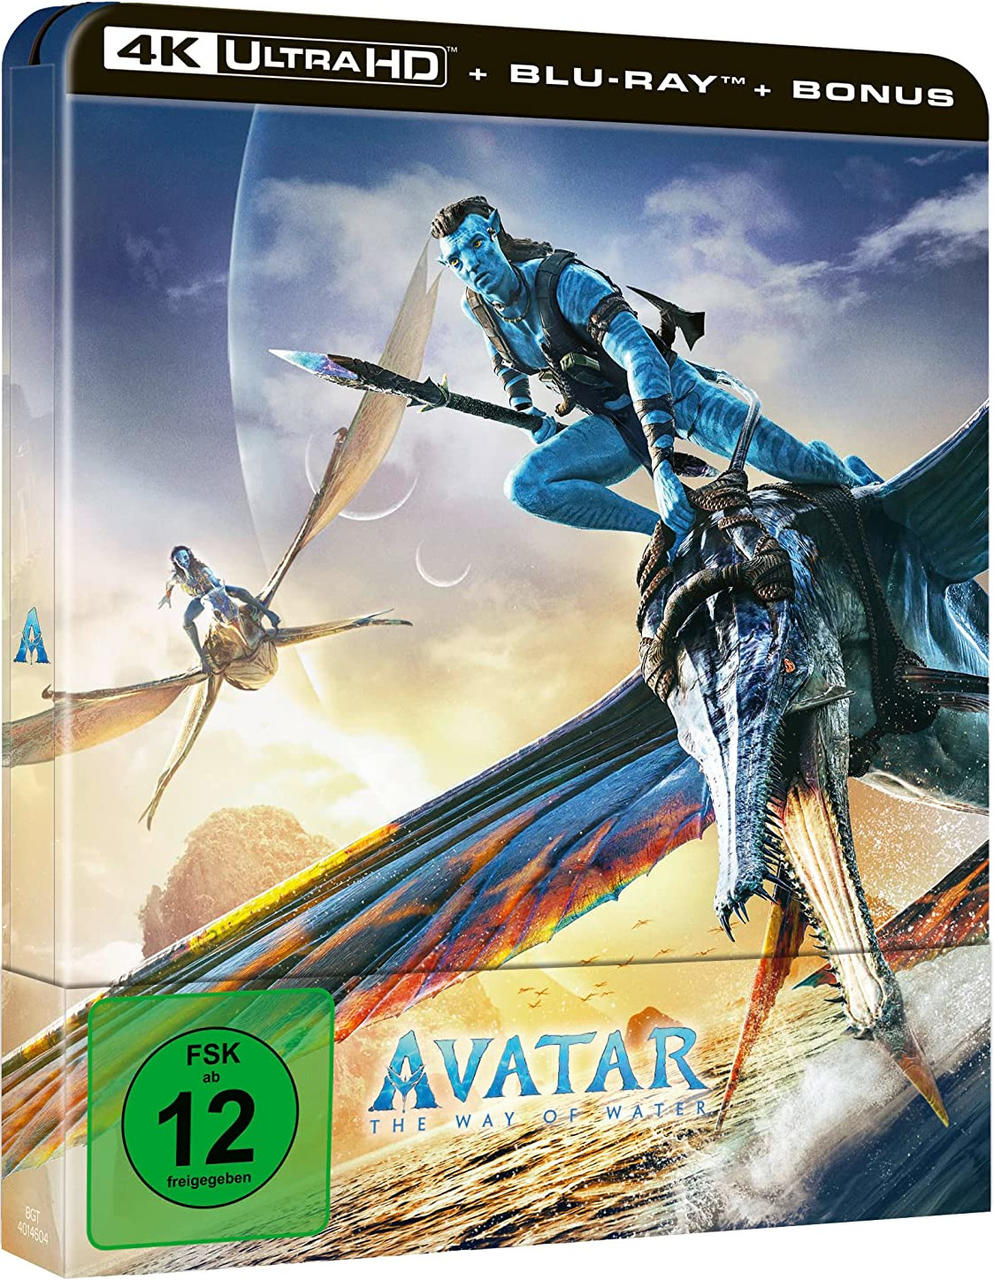 HD The of Blu-ray Way + Avatar: Blu-ray Water 4K Ultra